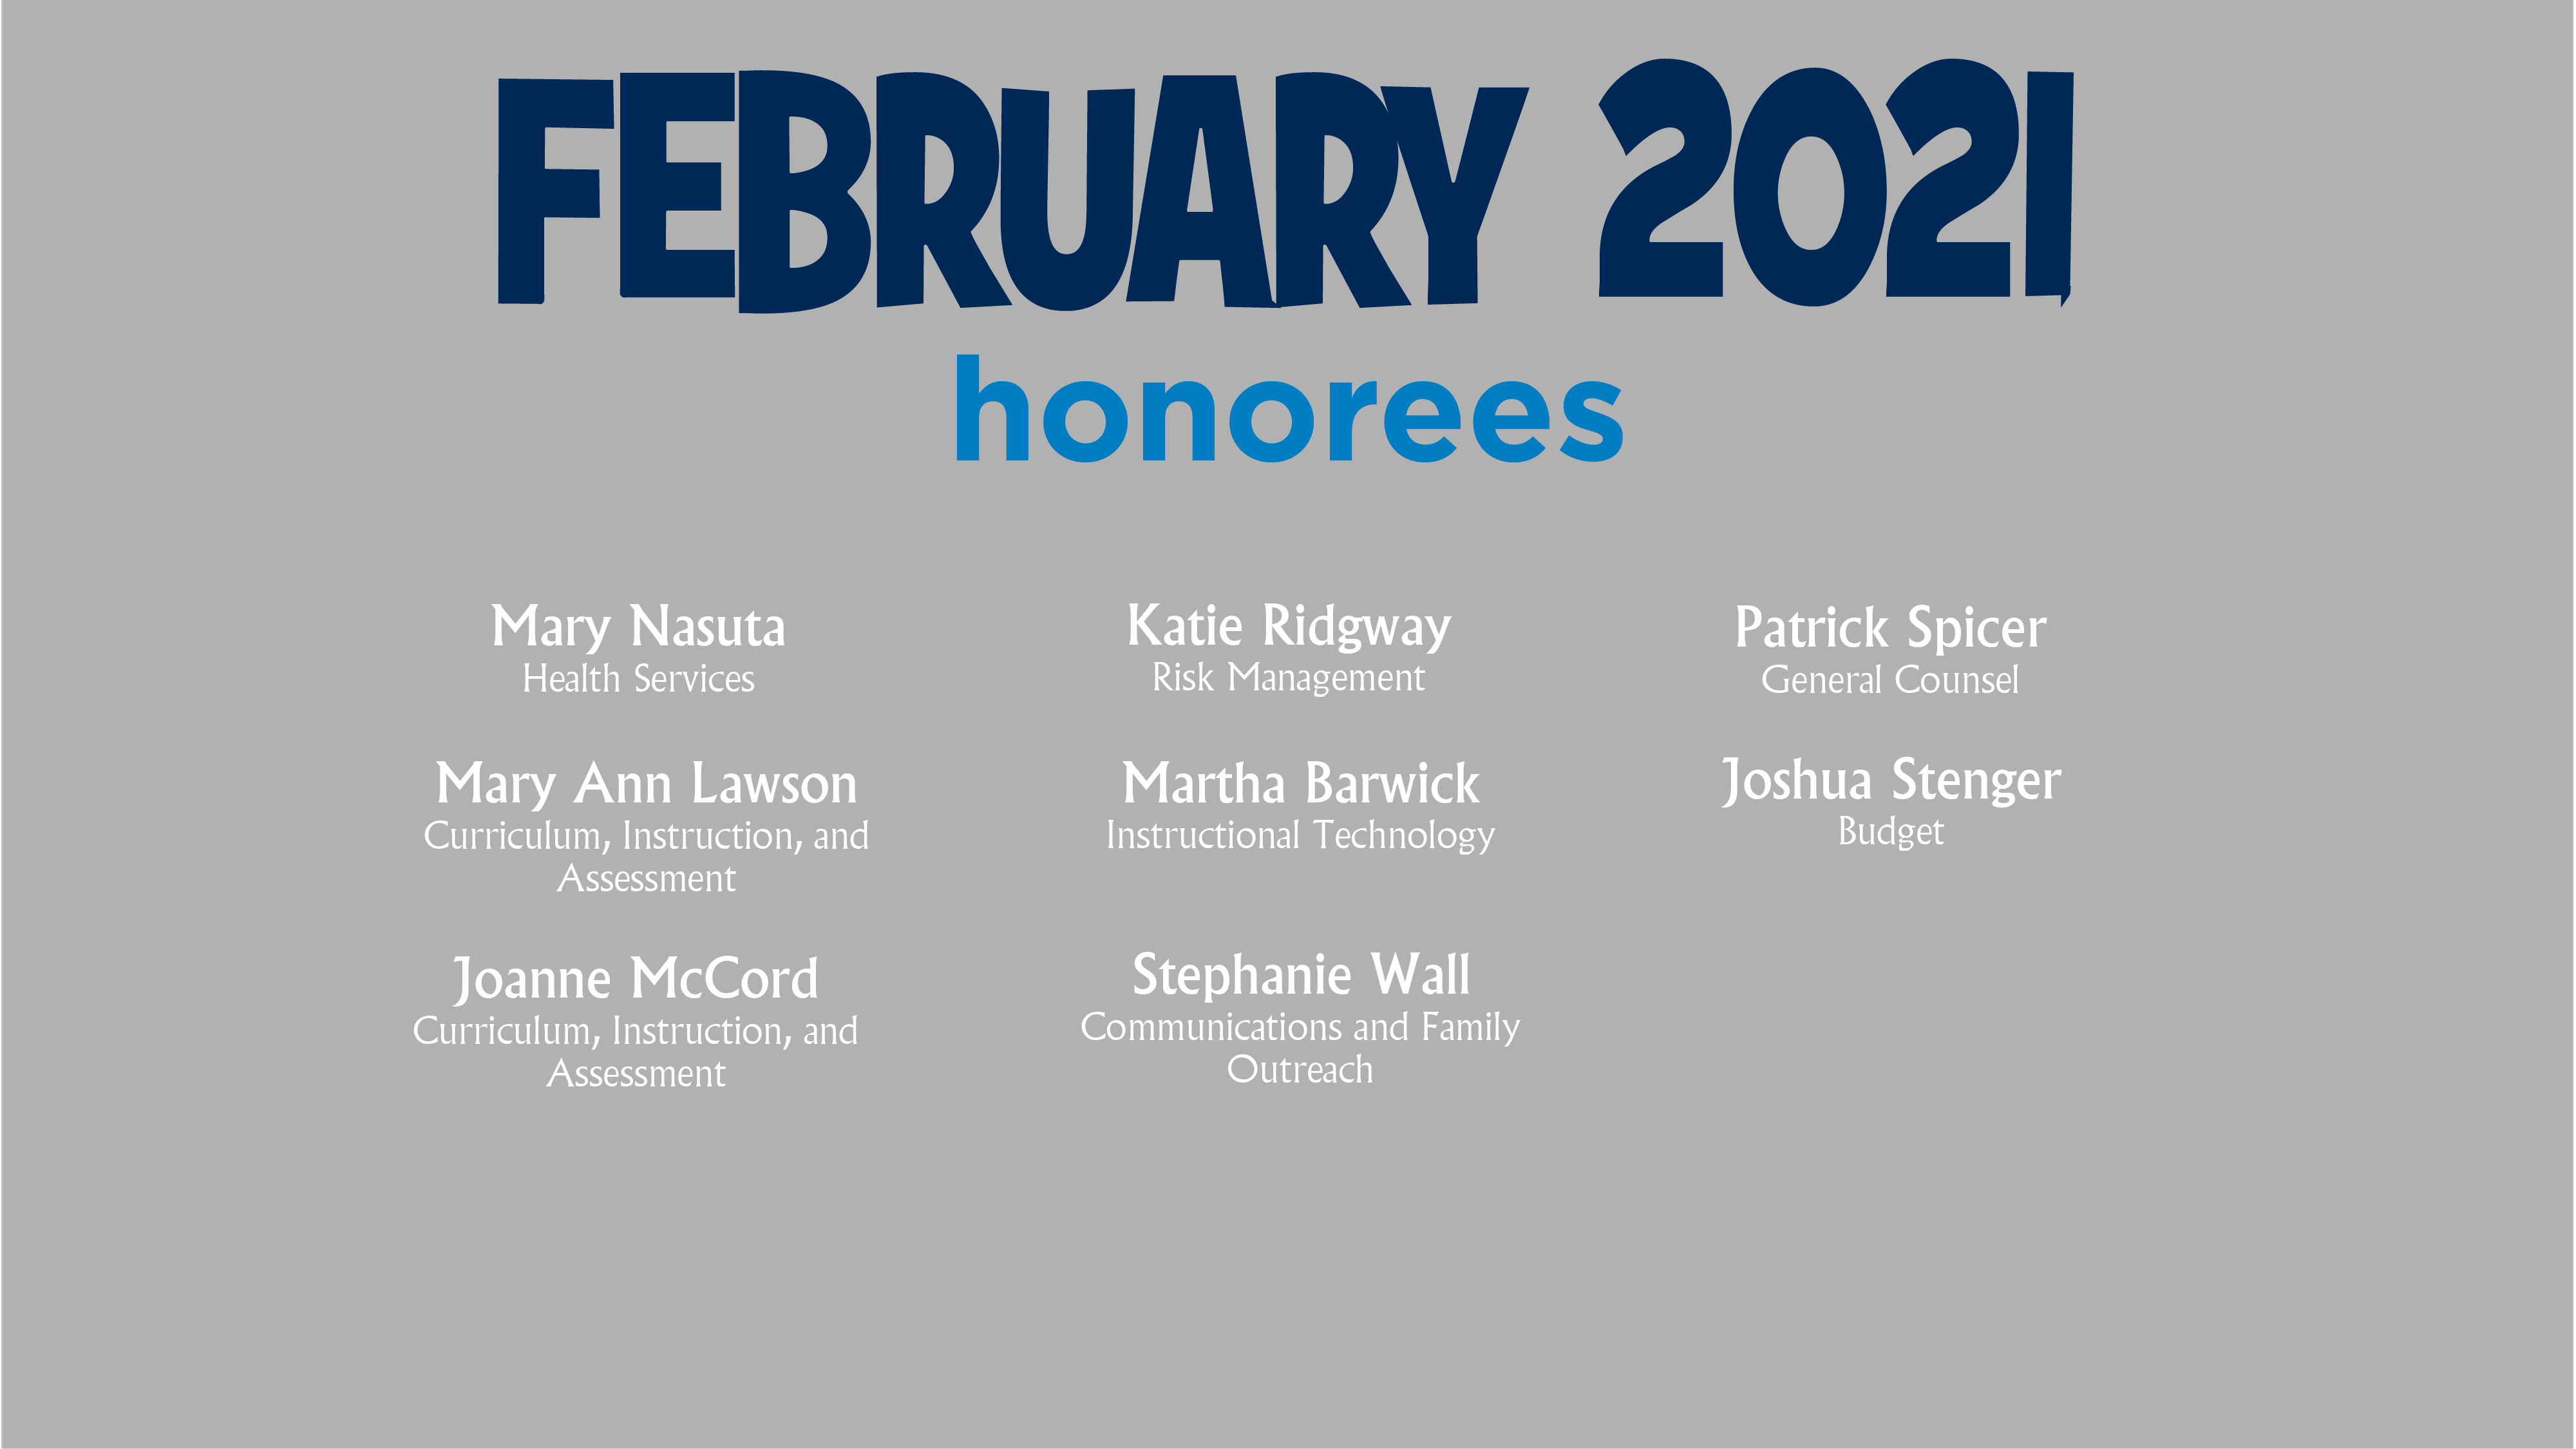 HCPS Bowtie Breakfast Honorees - February 2021